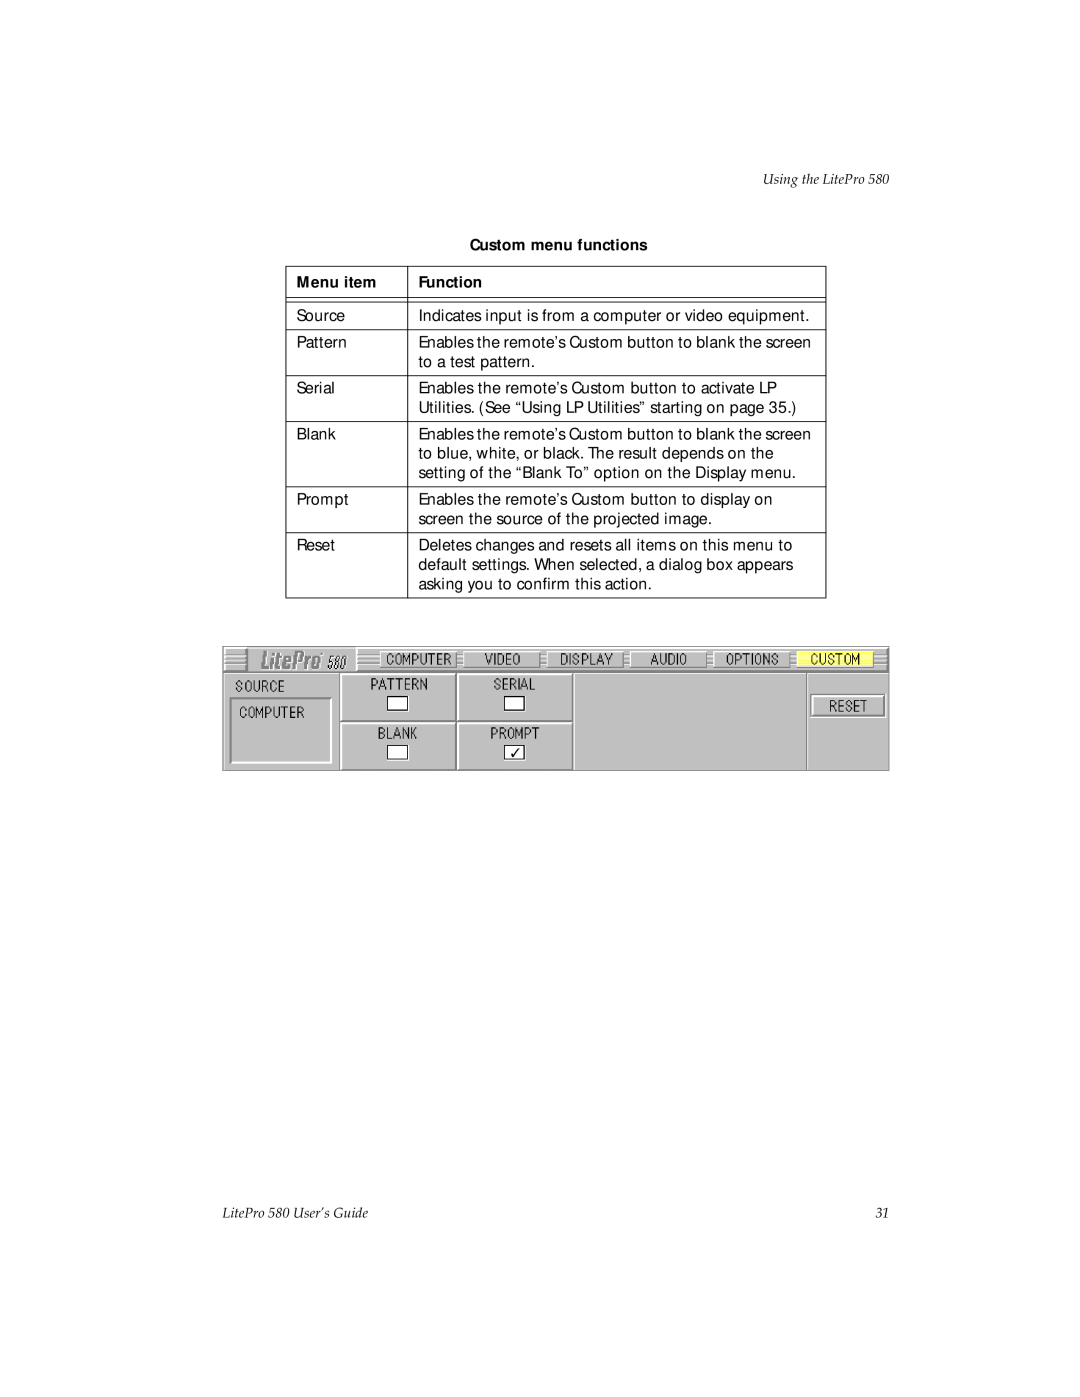 Hubbell 580 manual Custom menu functions 